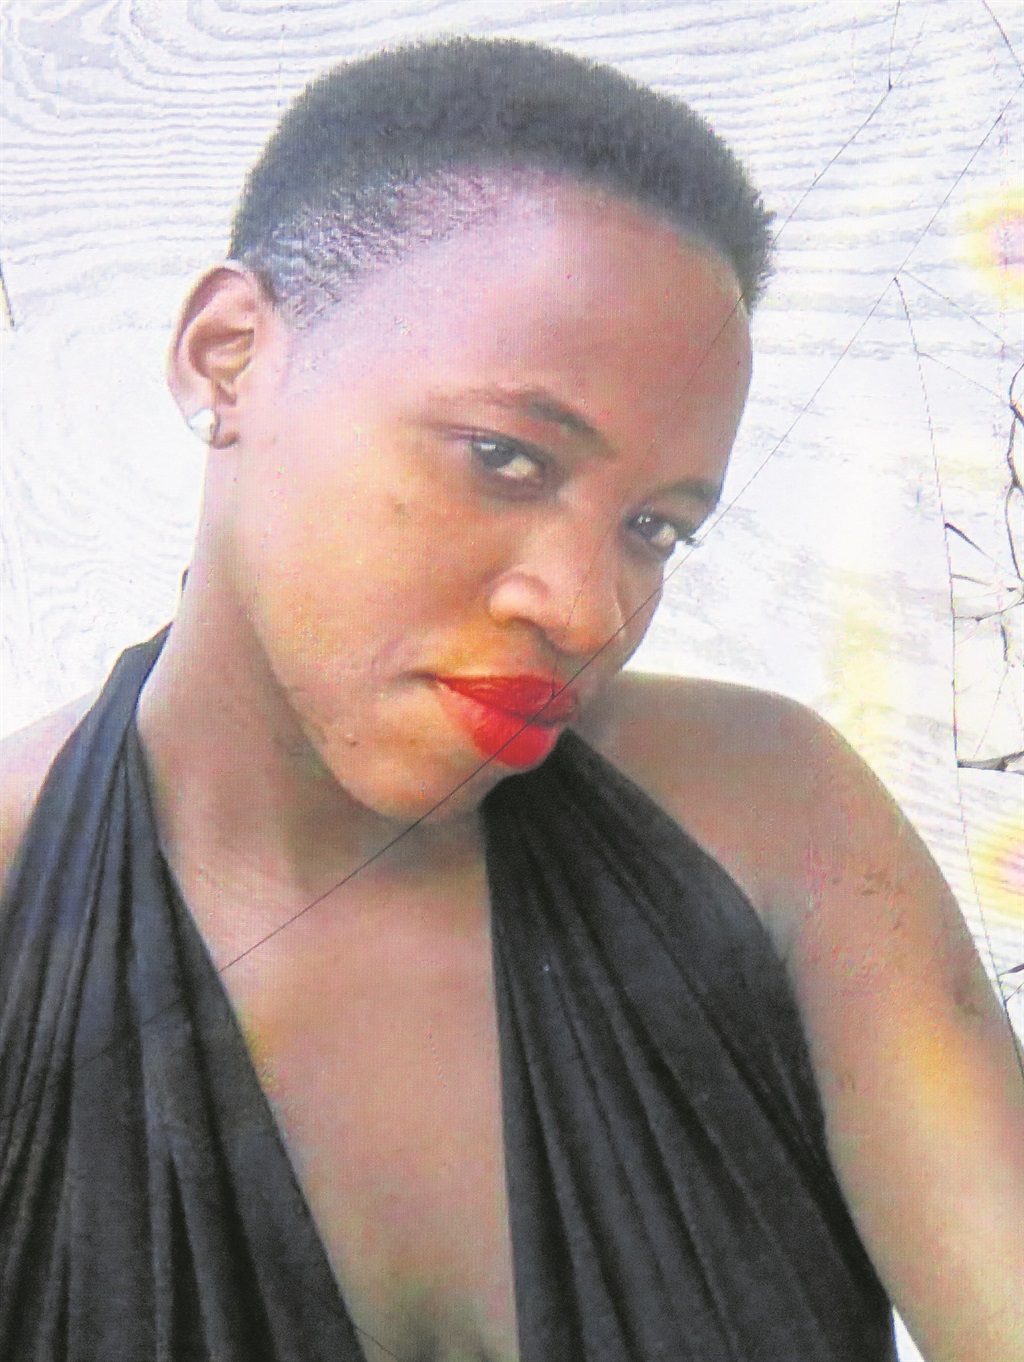 Kholeka Mahlangu died last Wednesday after being set alight.